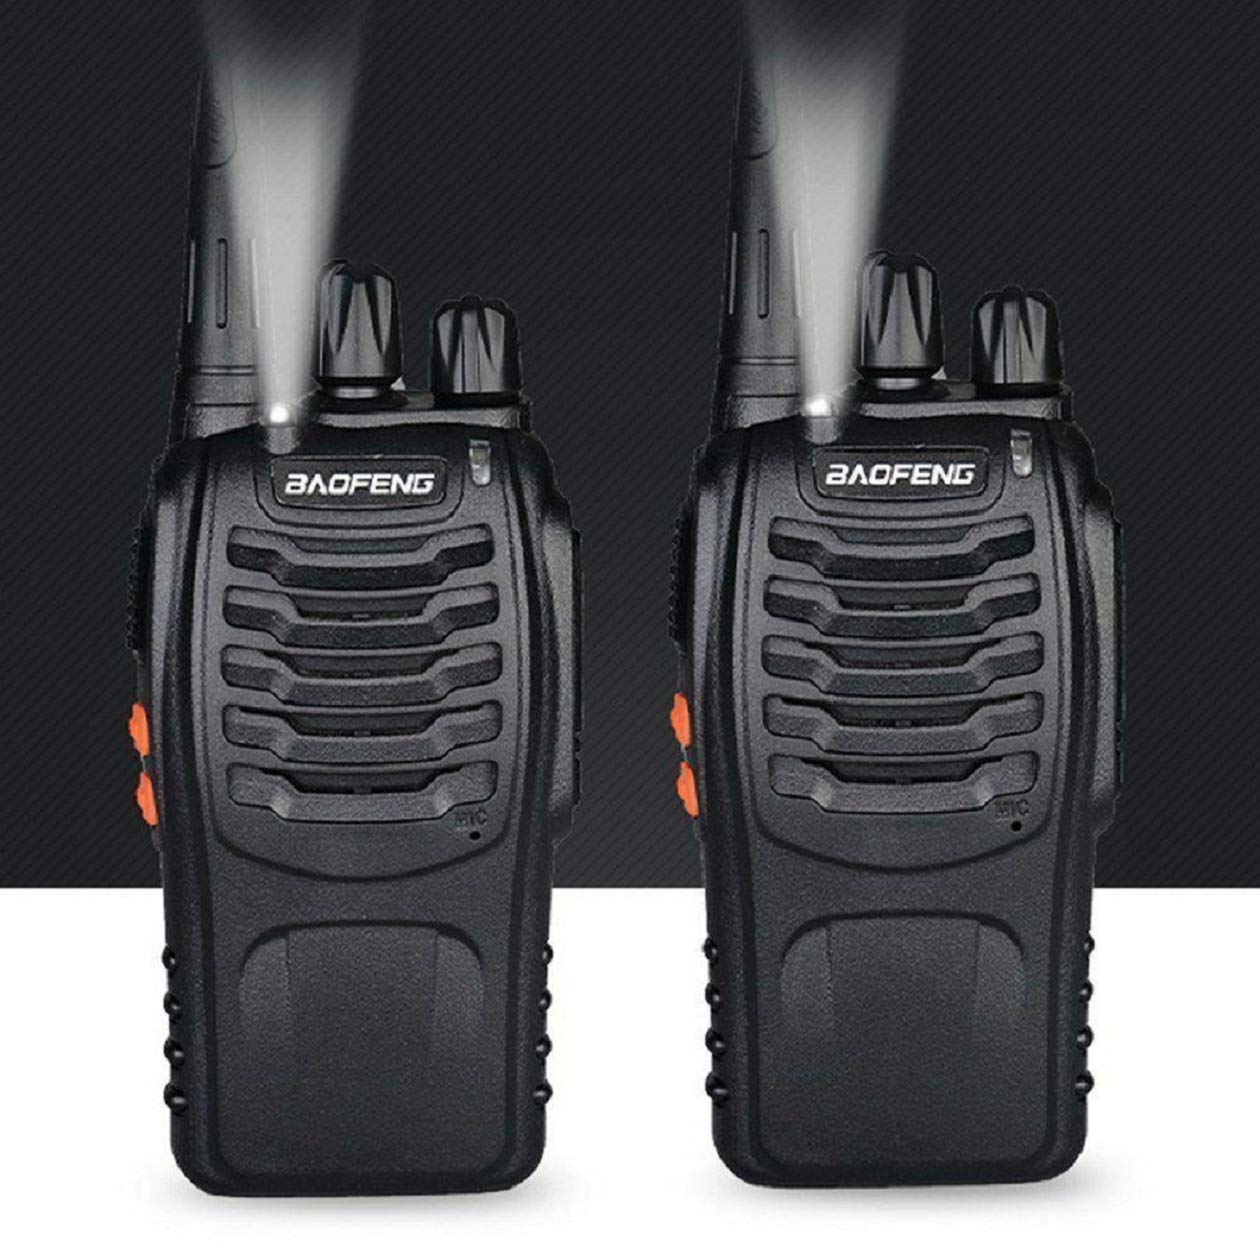 SekyuritiBijon UHF 400-470MHz CTCSS/DCS Handheld Amateur Radio Walkie Talkie  Two-Way Radio Long Range, 16 Channels, with Earbud Microphone, Low Voltage  Alert (Black, 2-Pack) - Price History